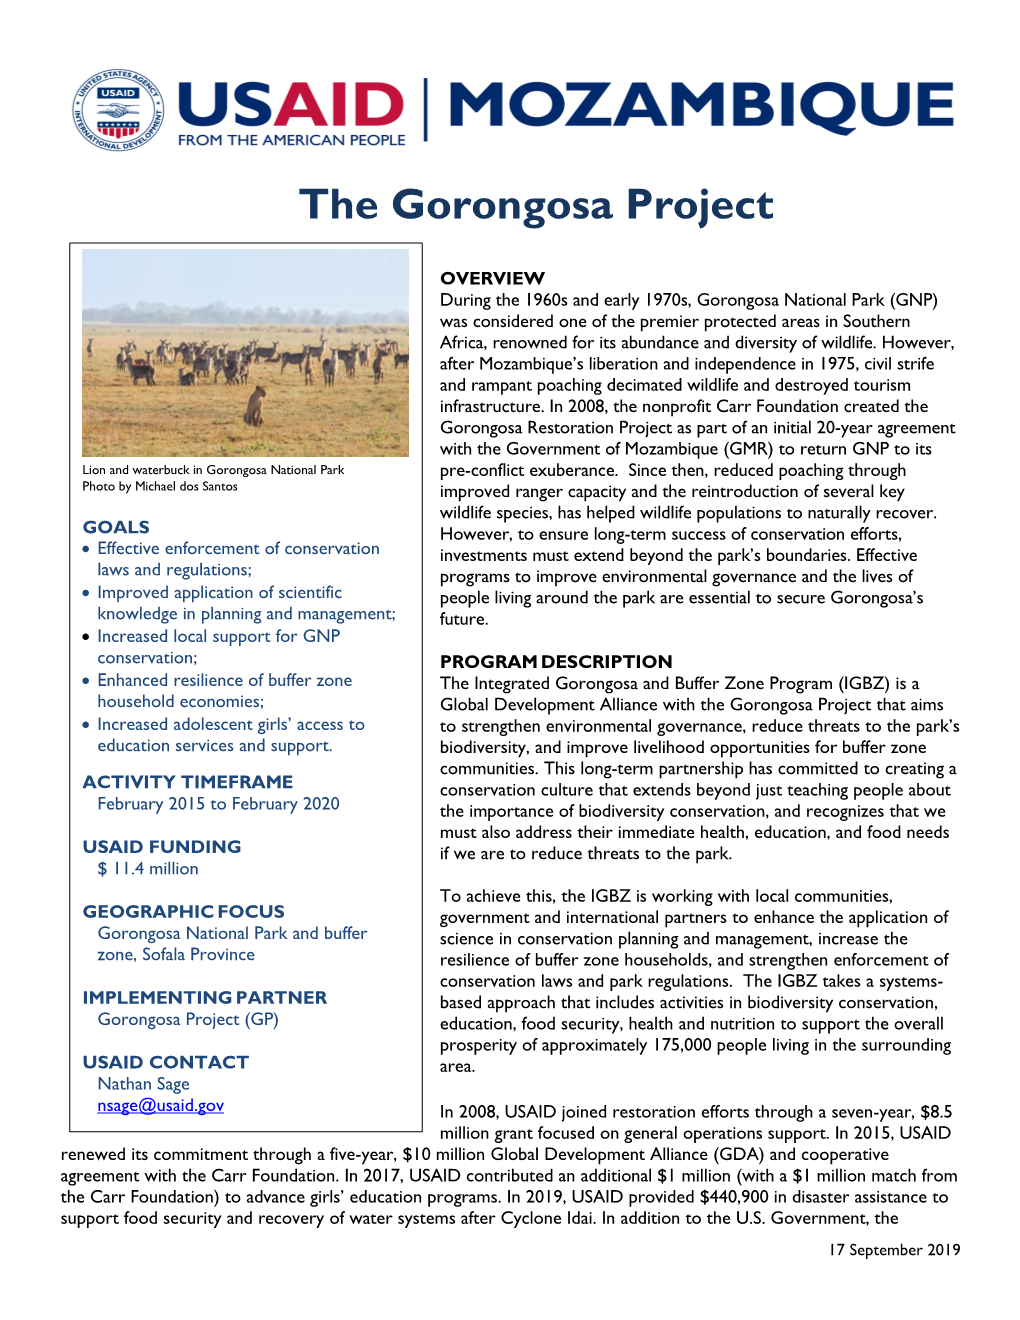 The Gorongosa Project